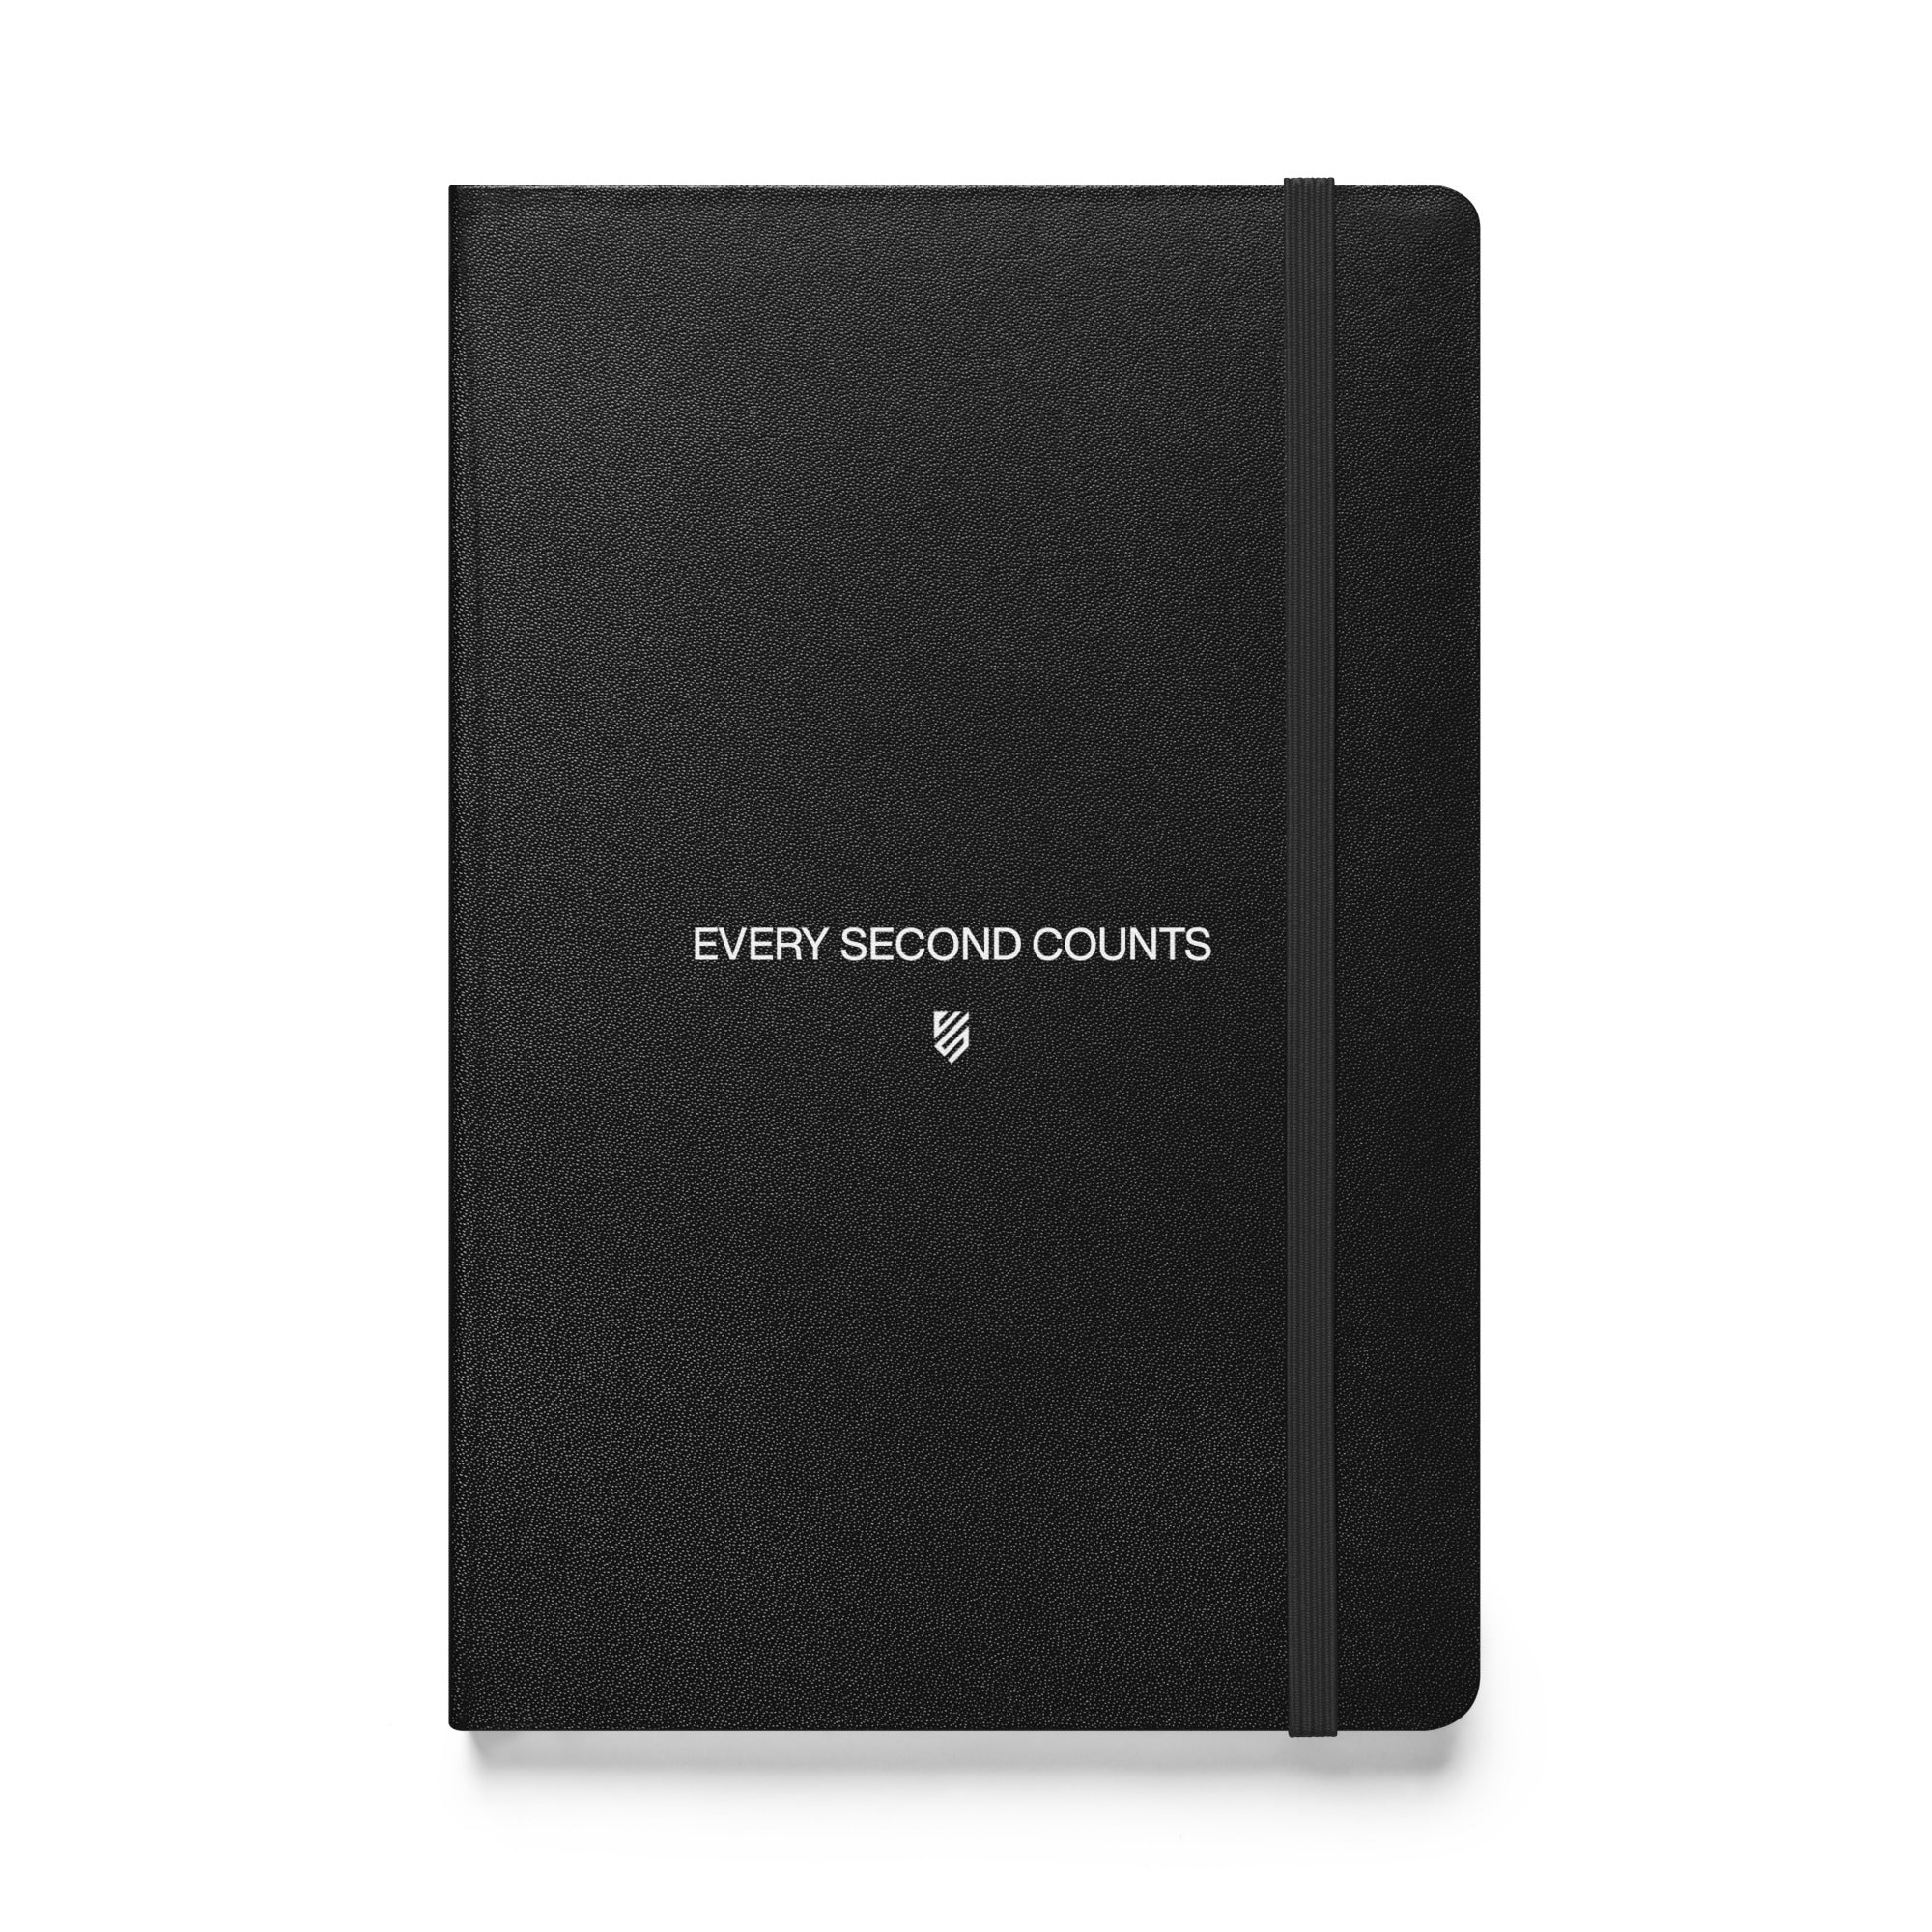 hardcover-bound-notebook-black-front-64d29f06c2e2c.jpg